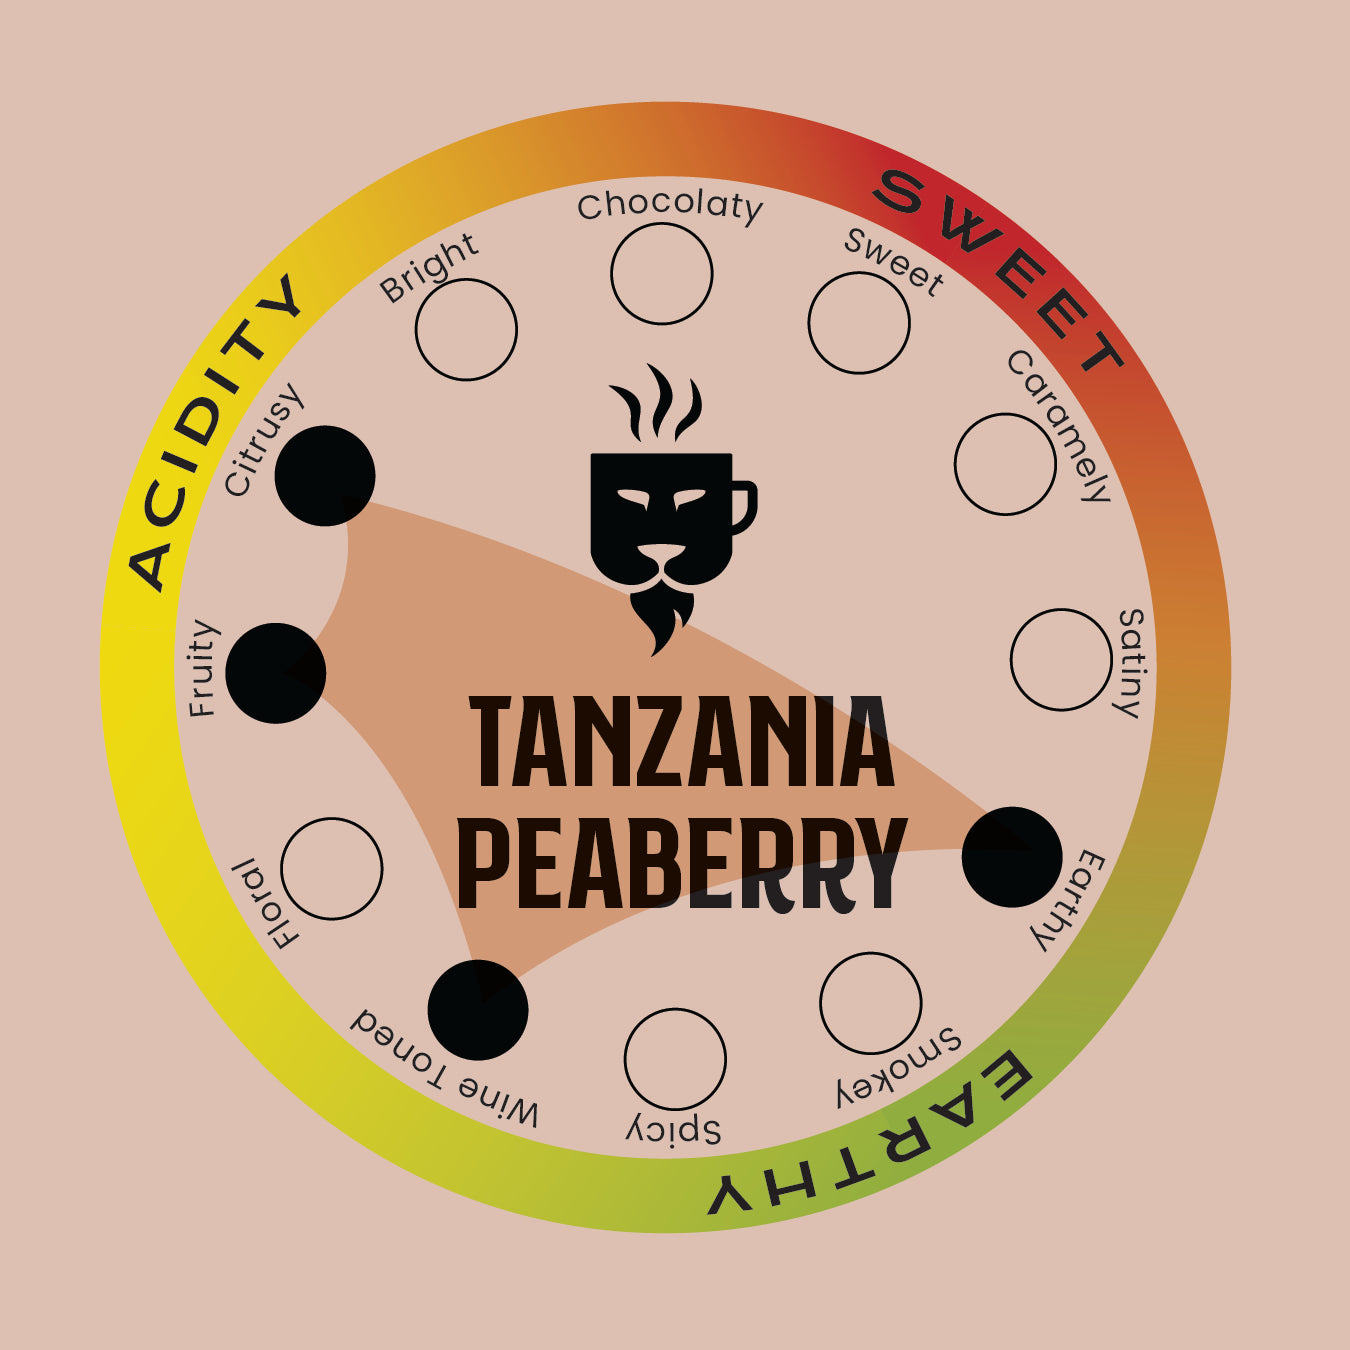 TANZANIA PEABERRY COFFEE